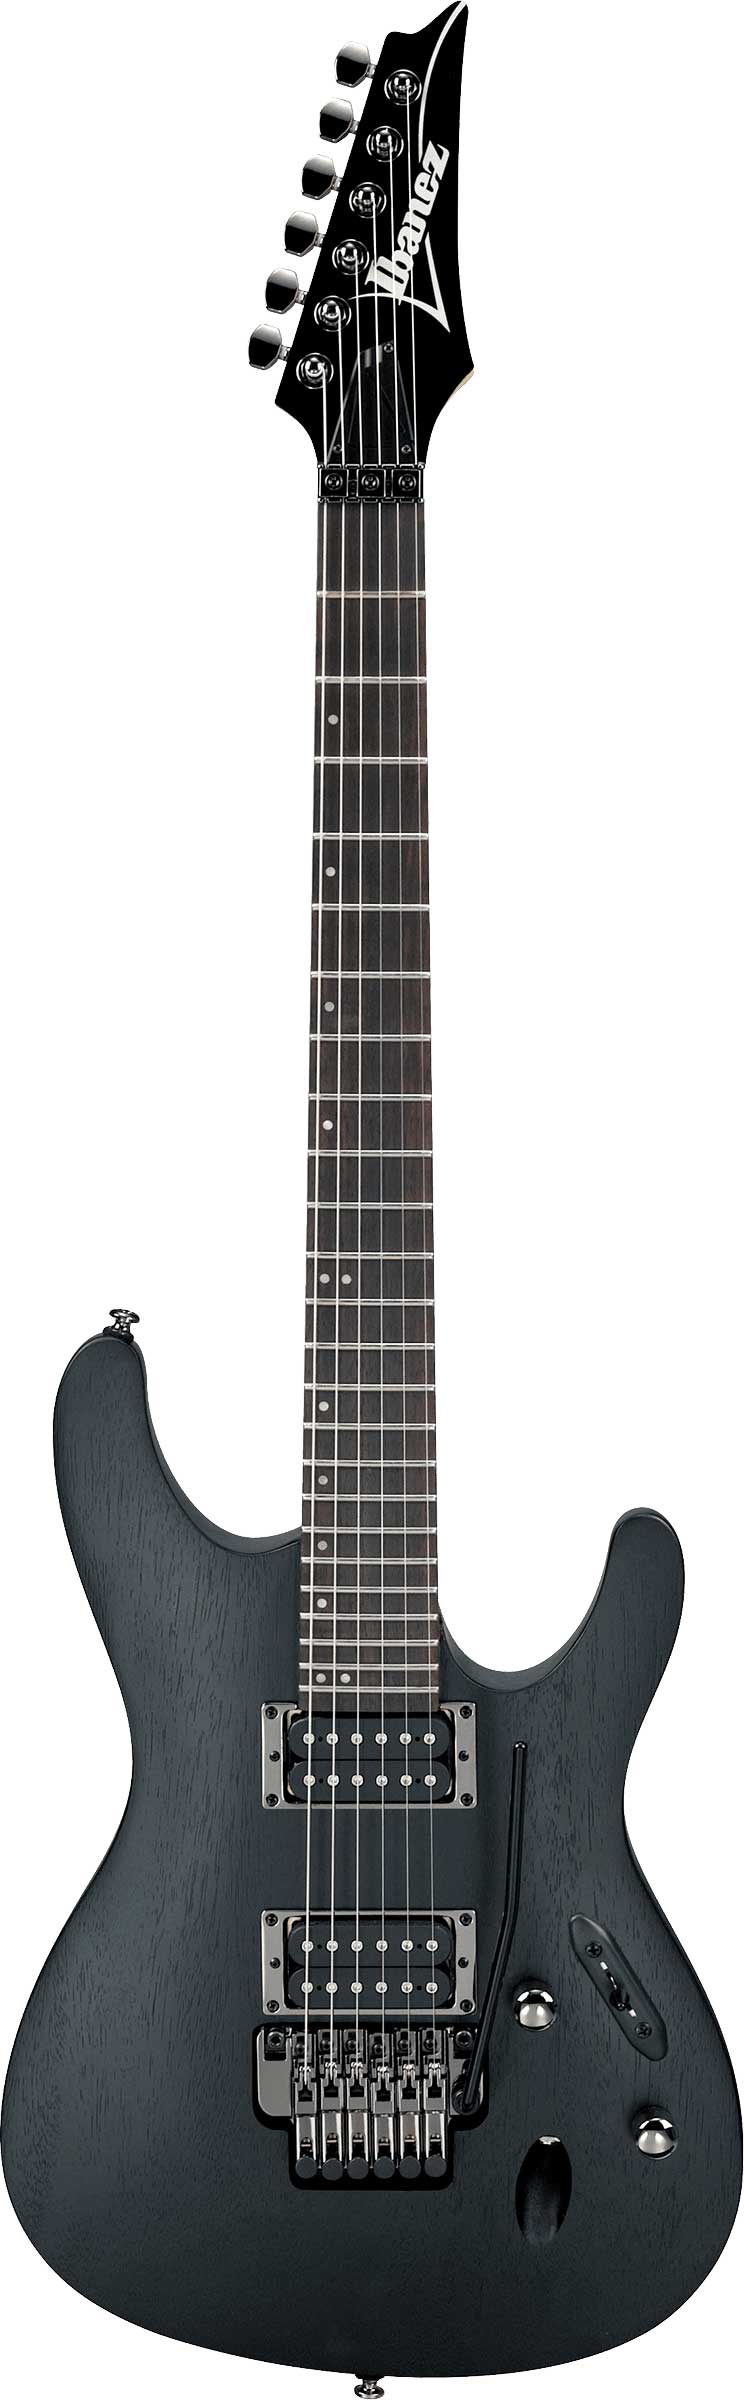 Ibanez S520 Weathered Black | guitarguitar